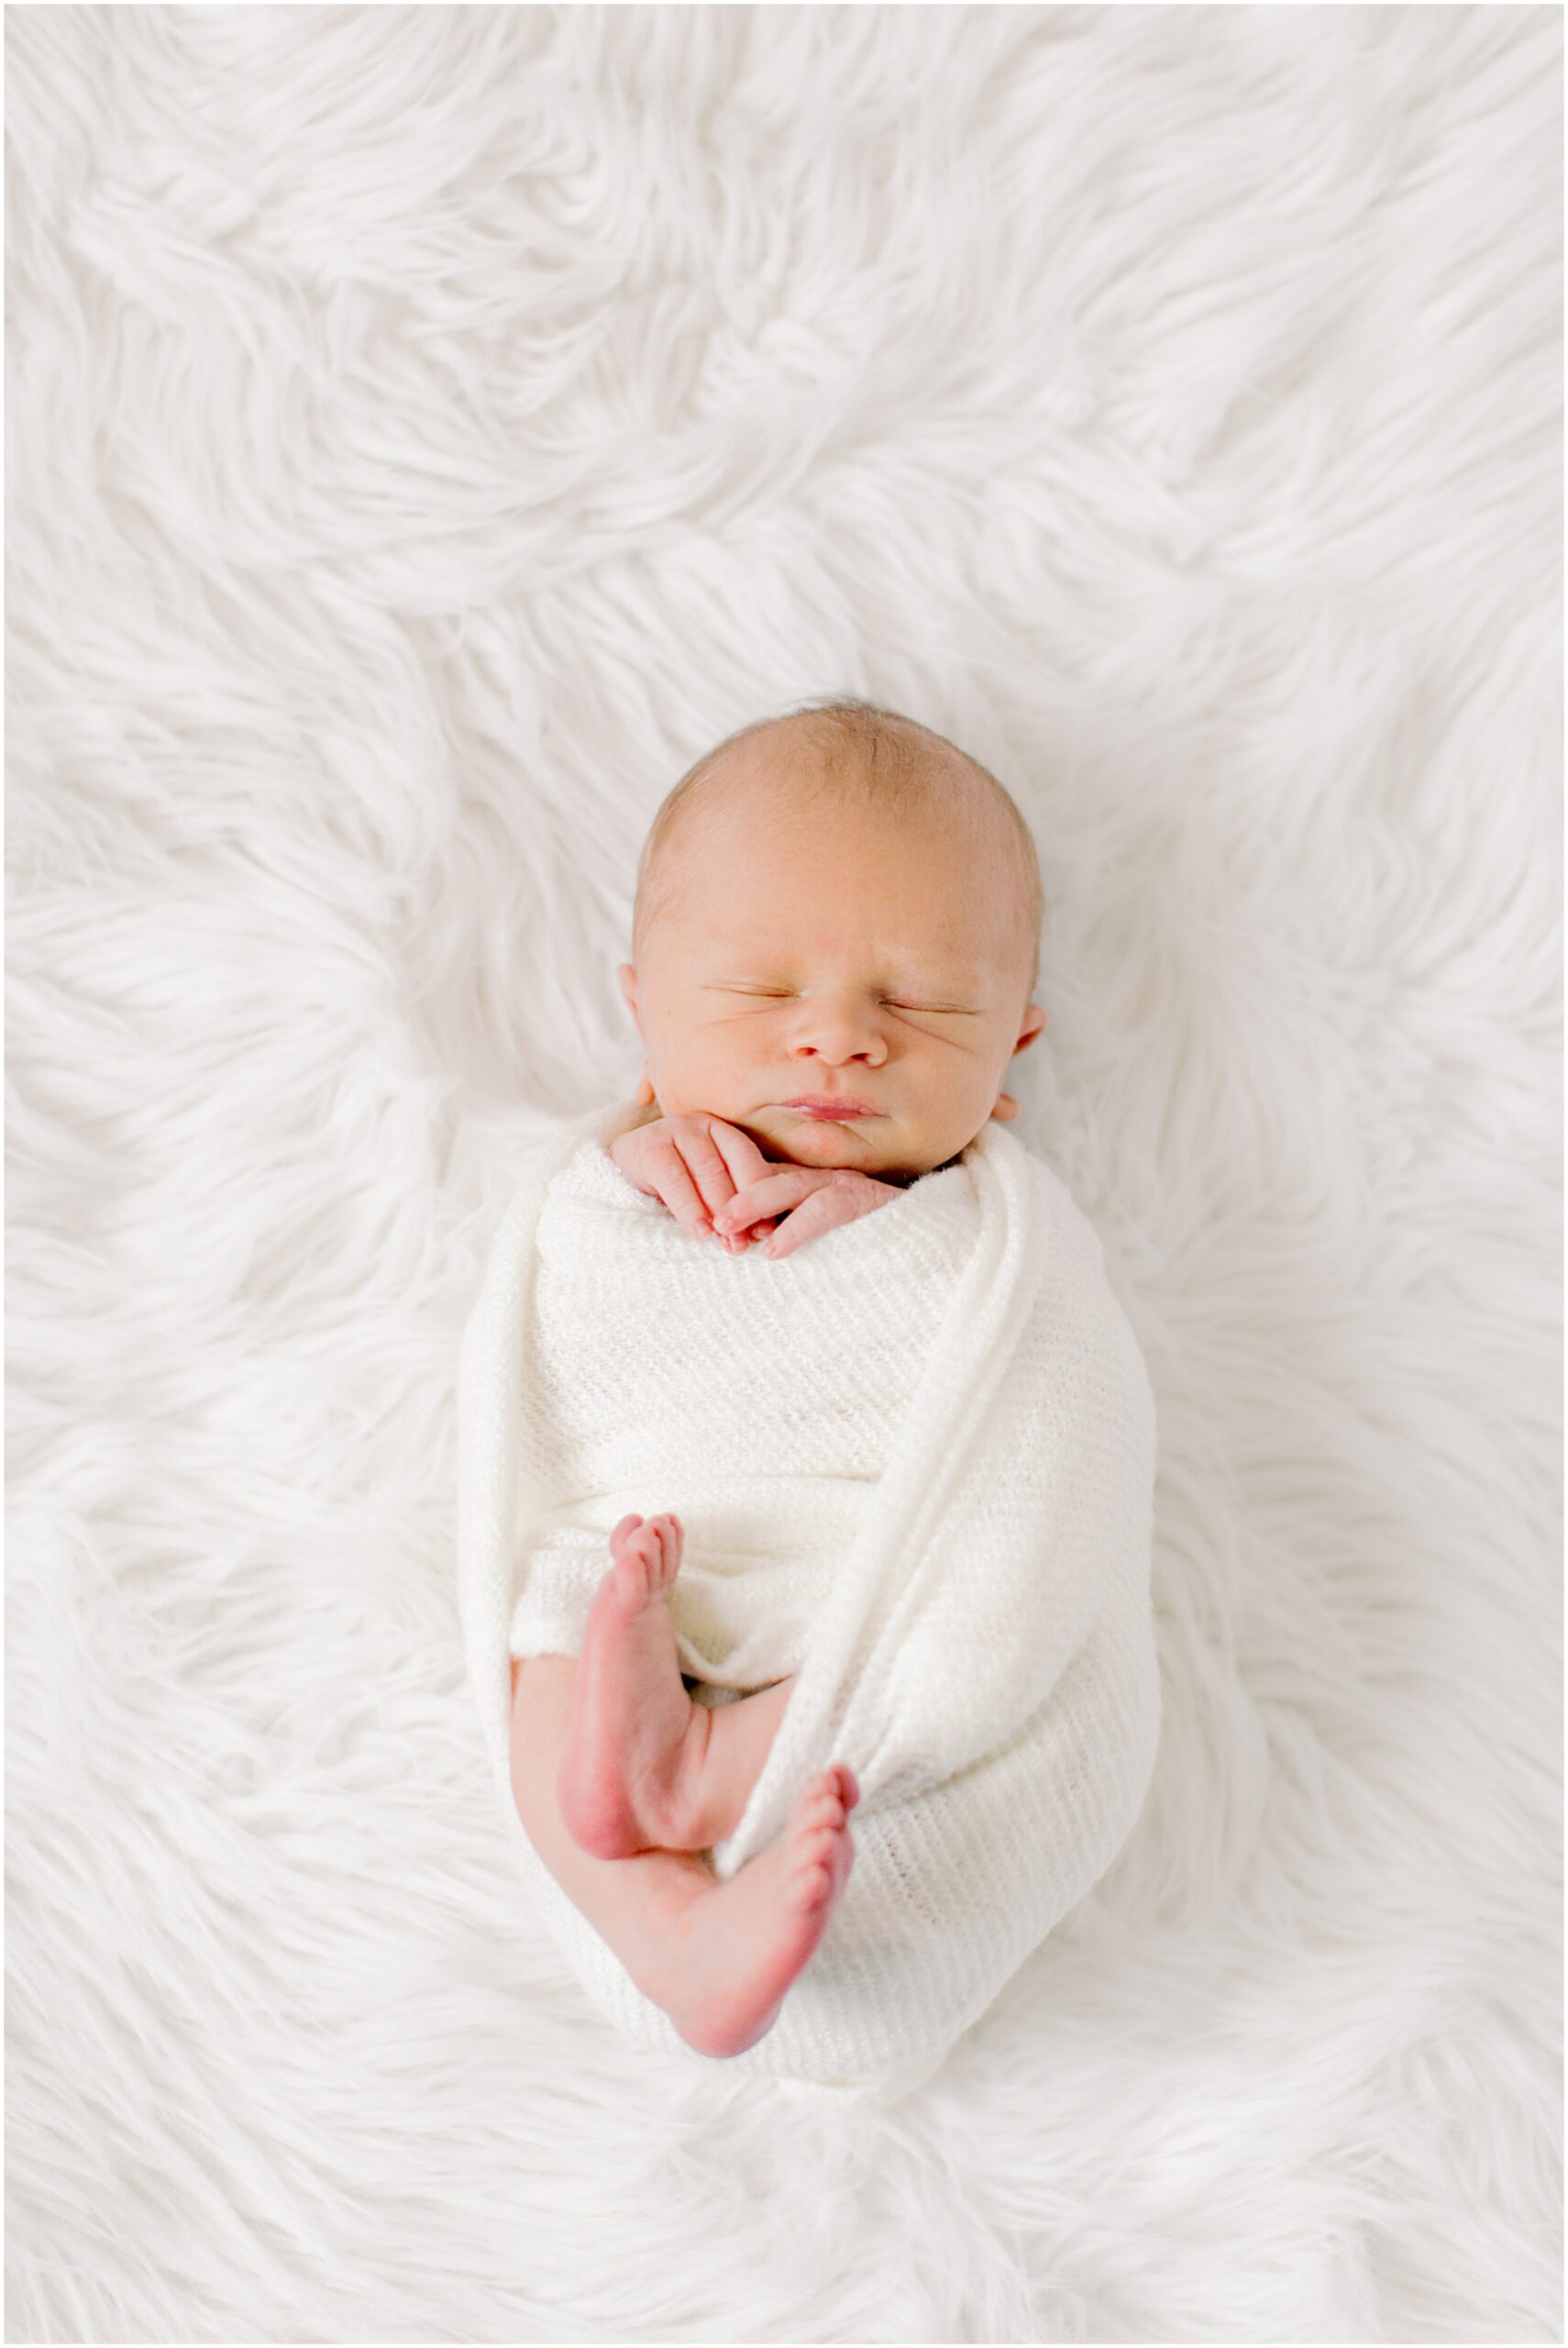 Newborn baby in Three Tips for a Successful Newborn Session